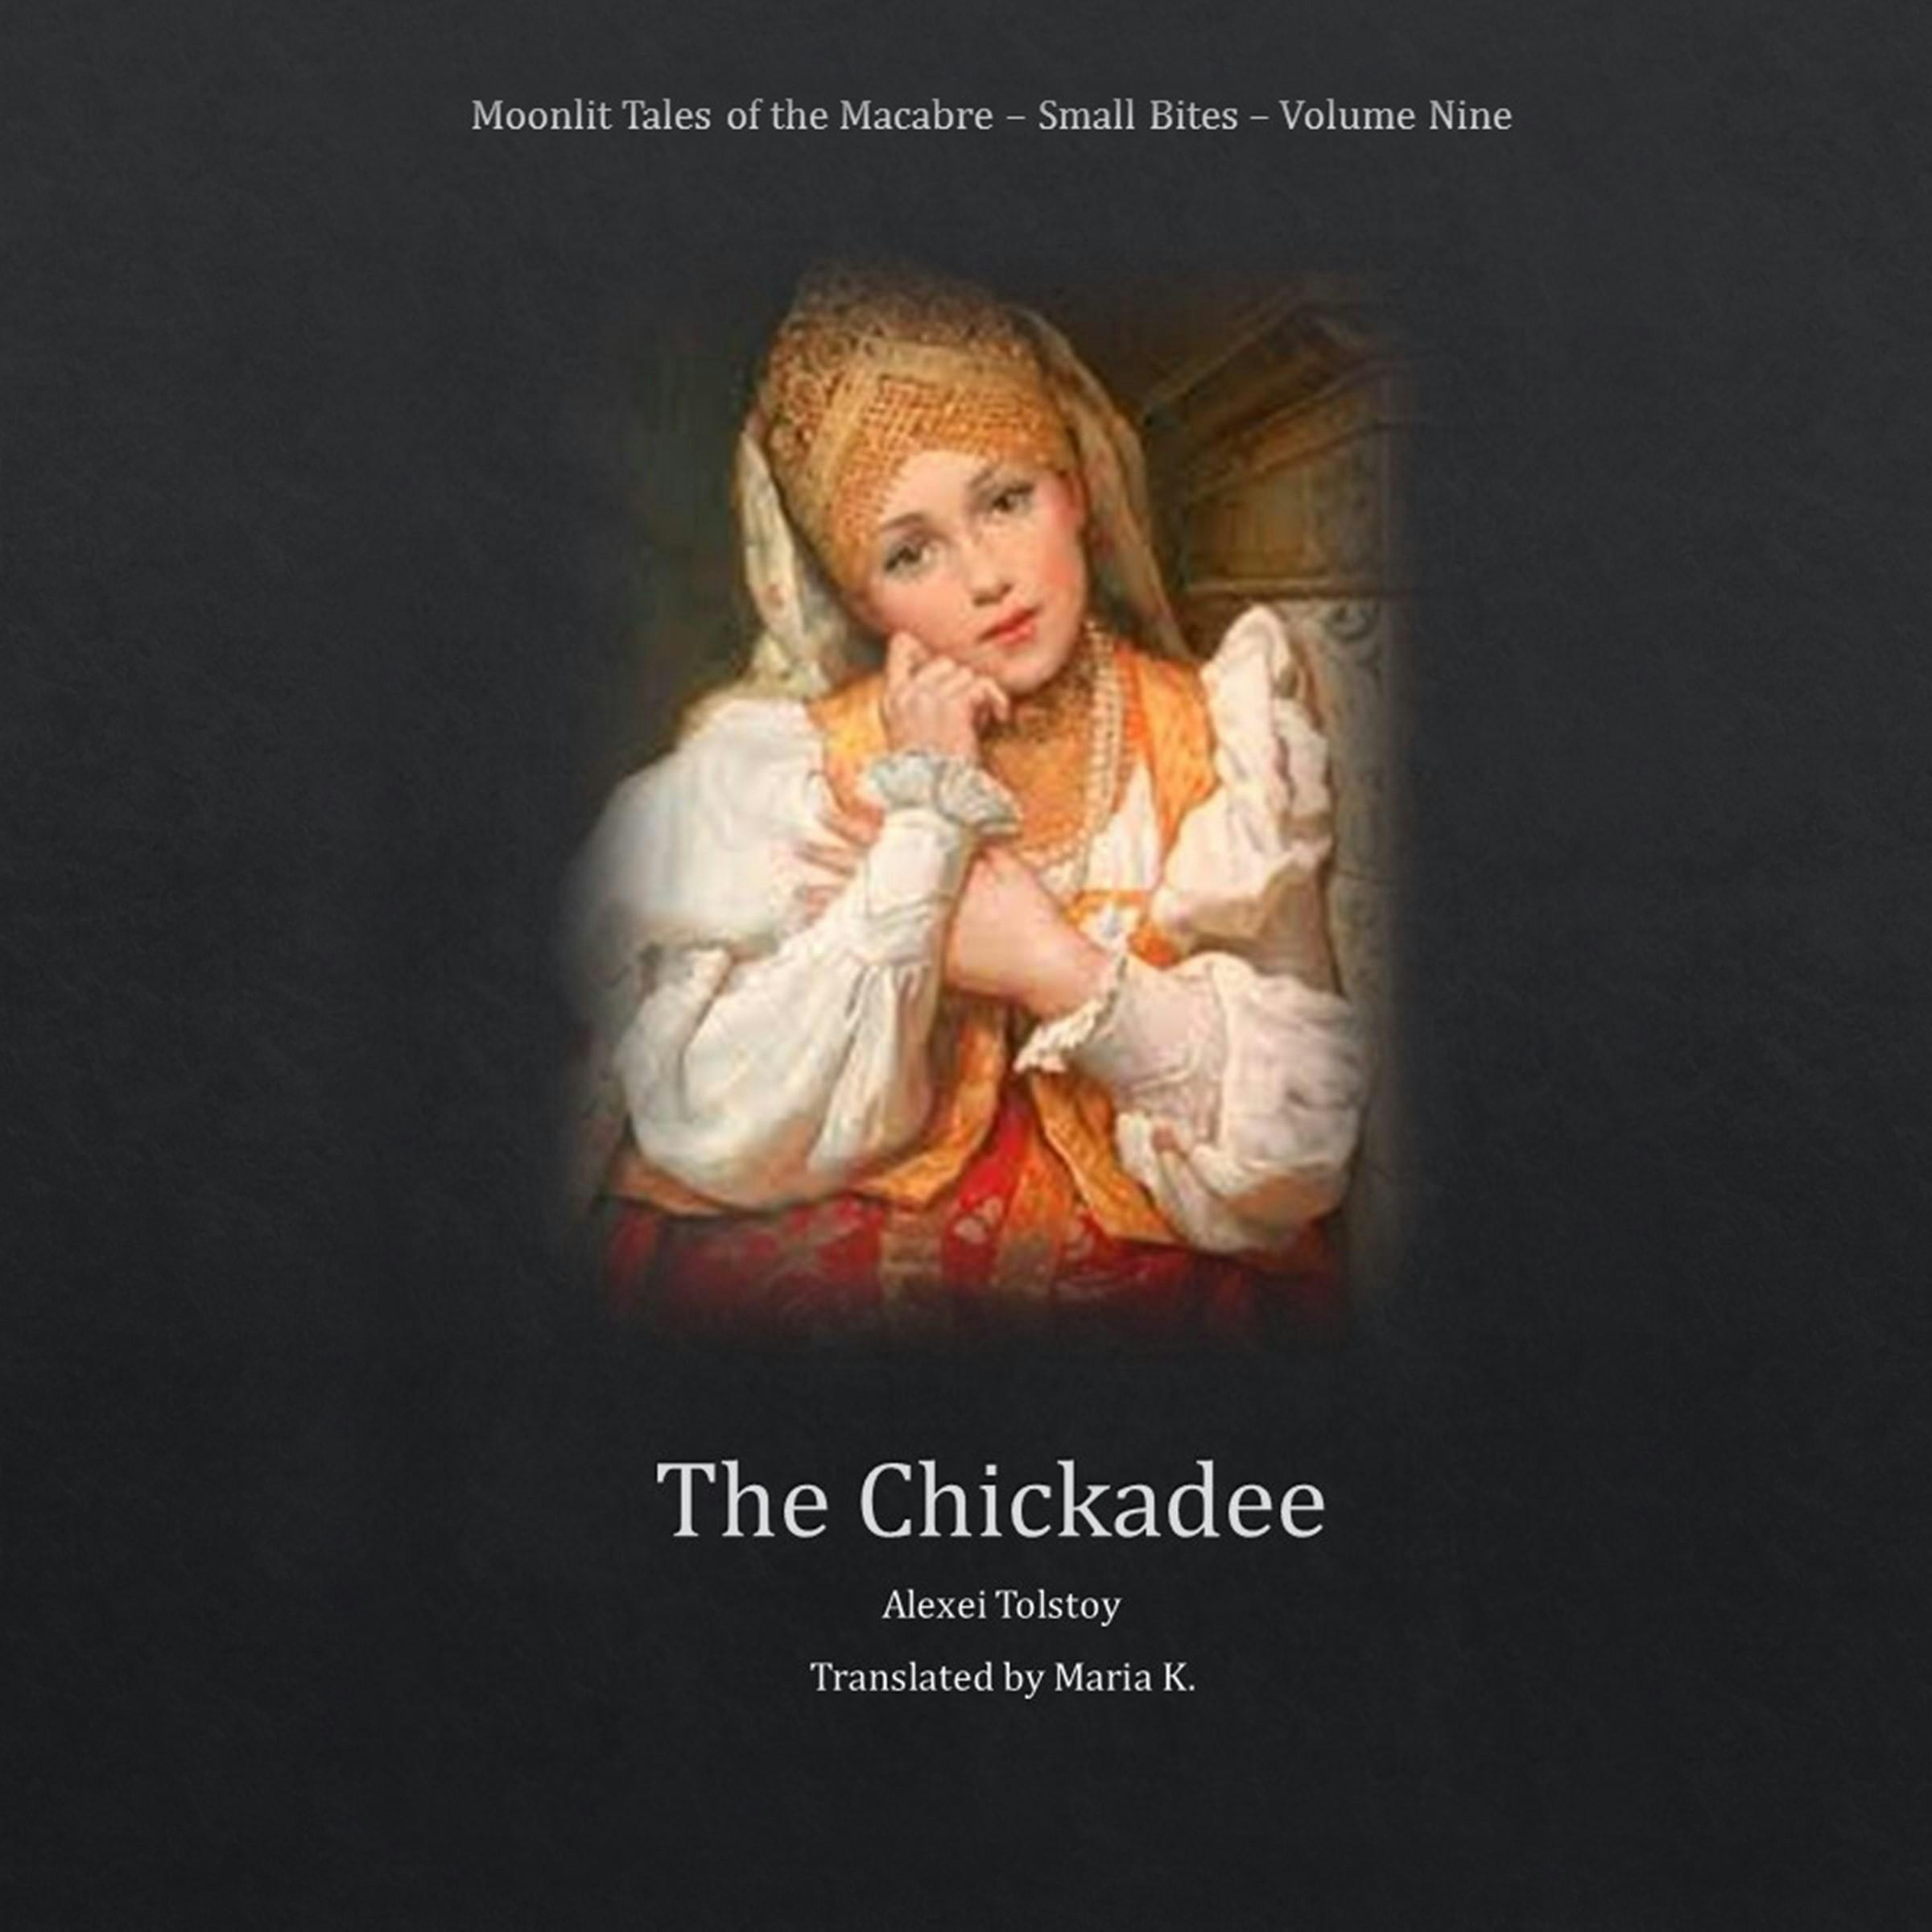 The Chickadee - Alexei Tolstoy